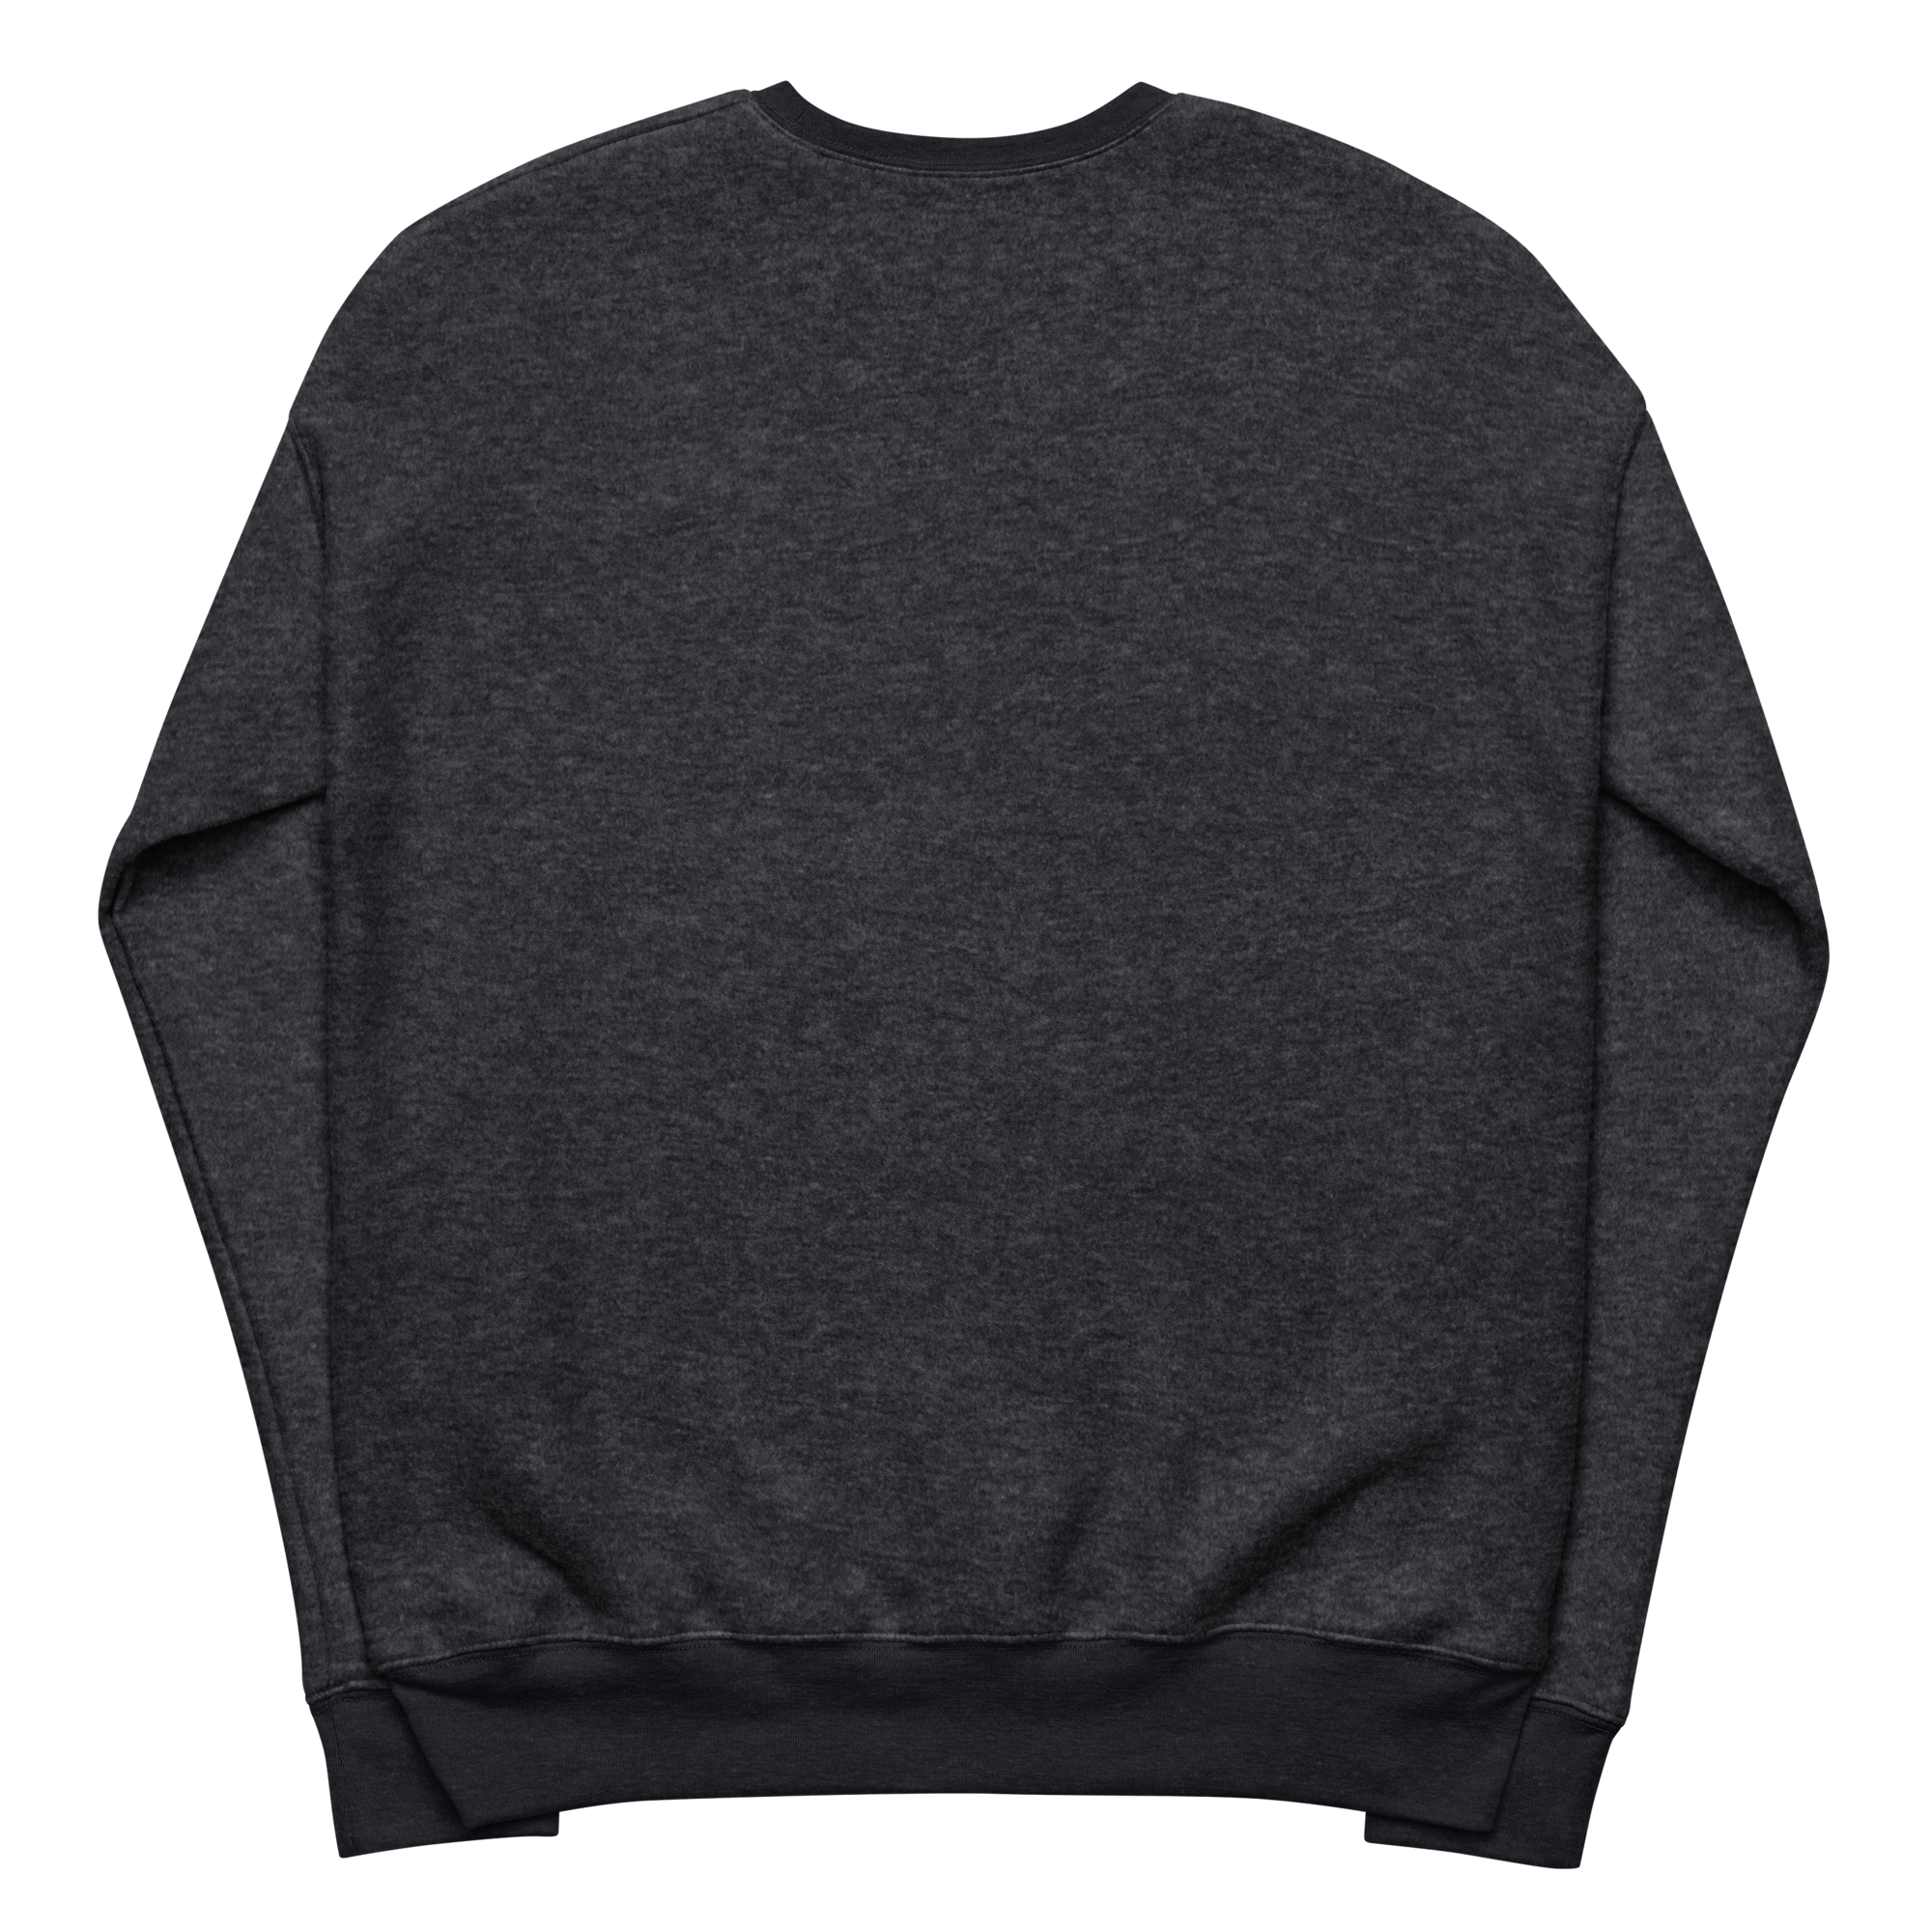 Classic SLSY sueded fleece sweatshirt